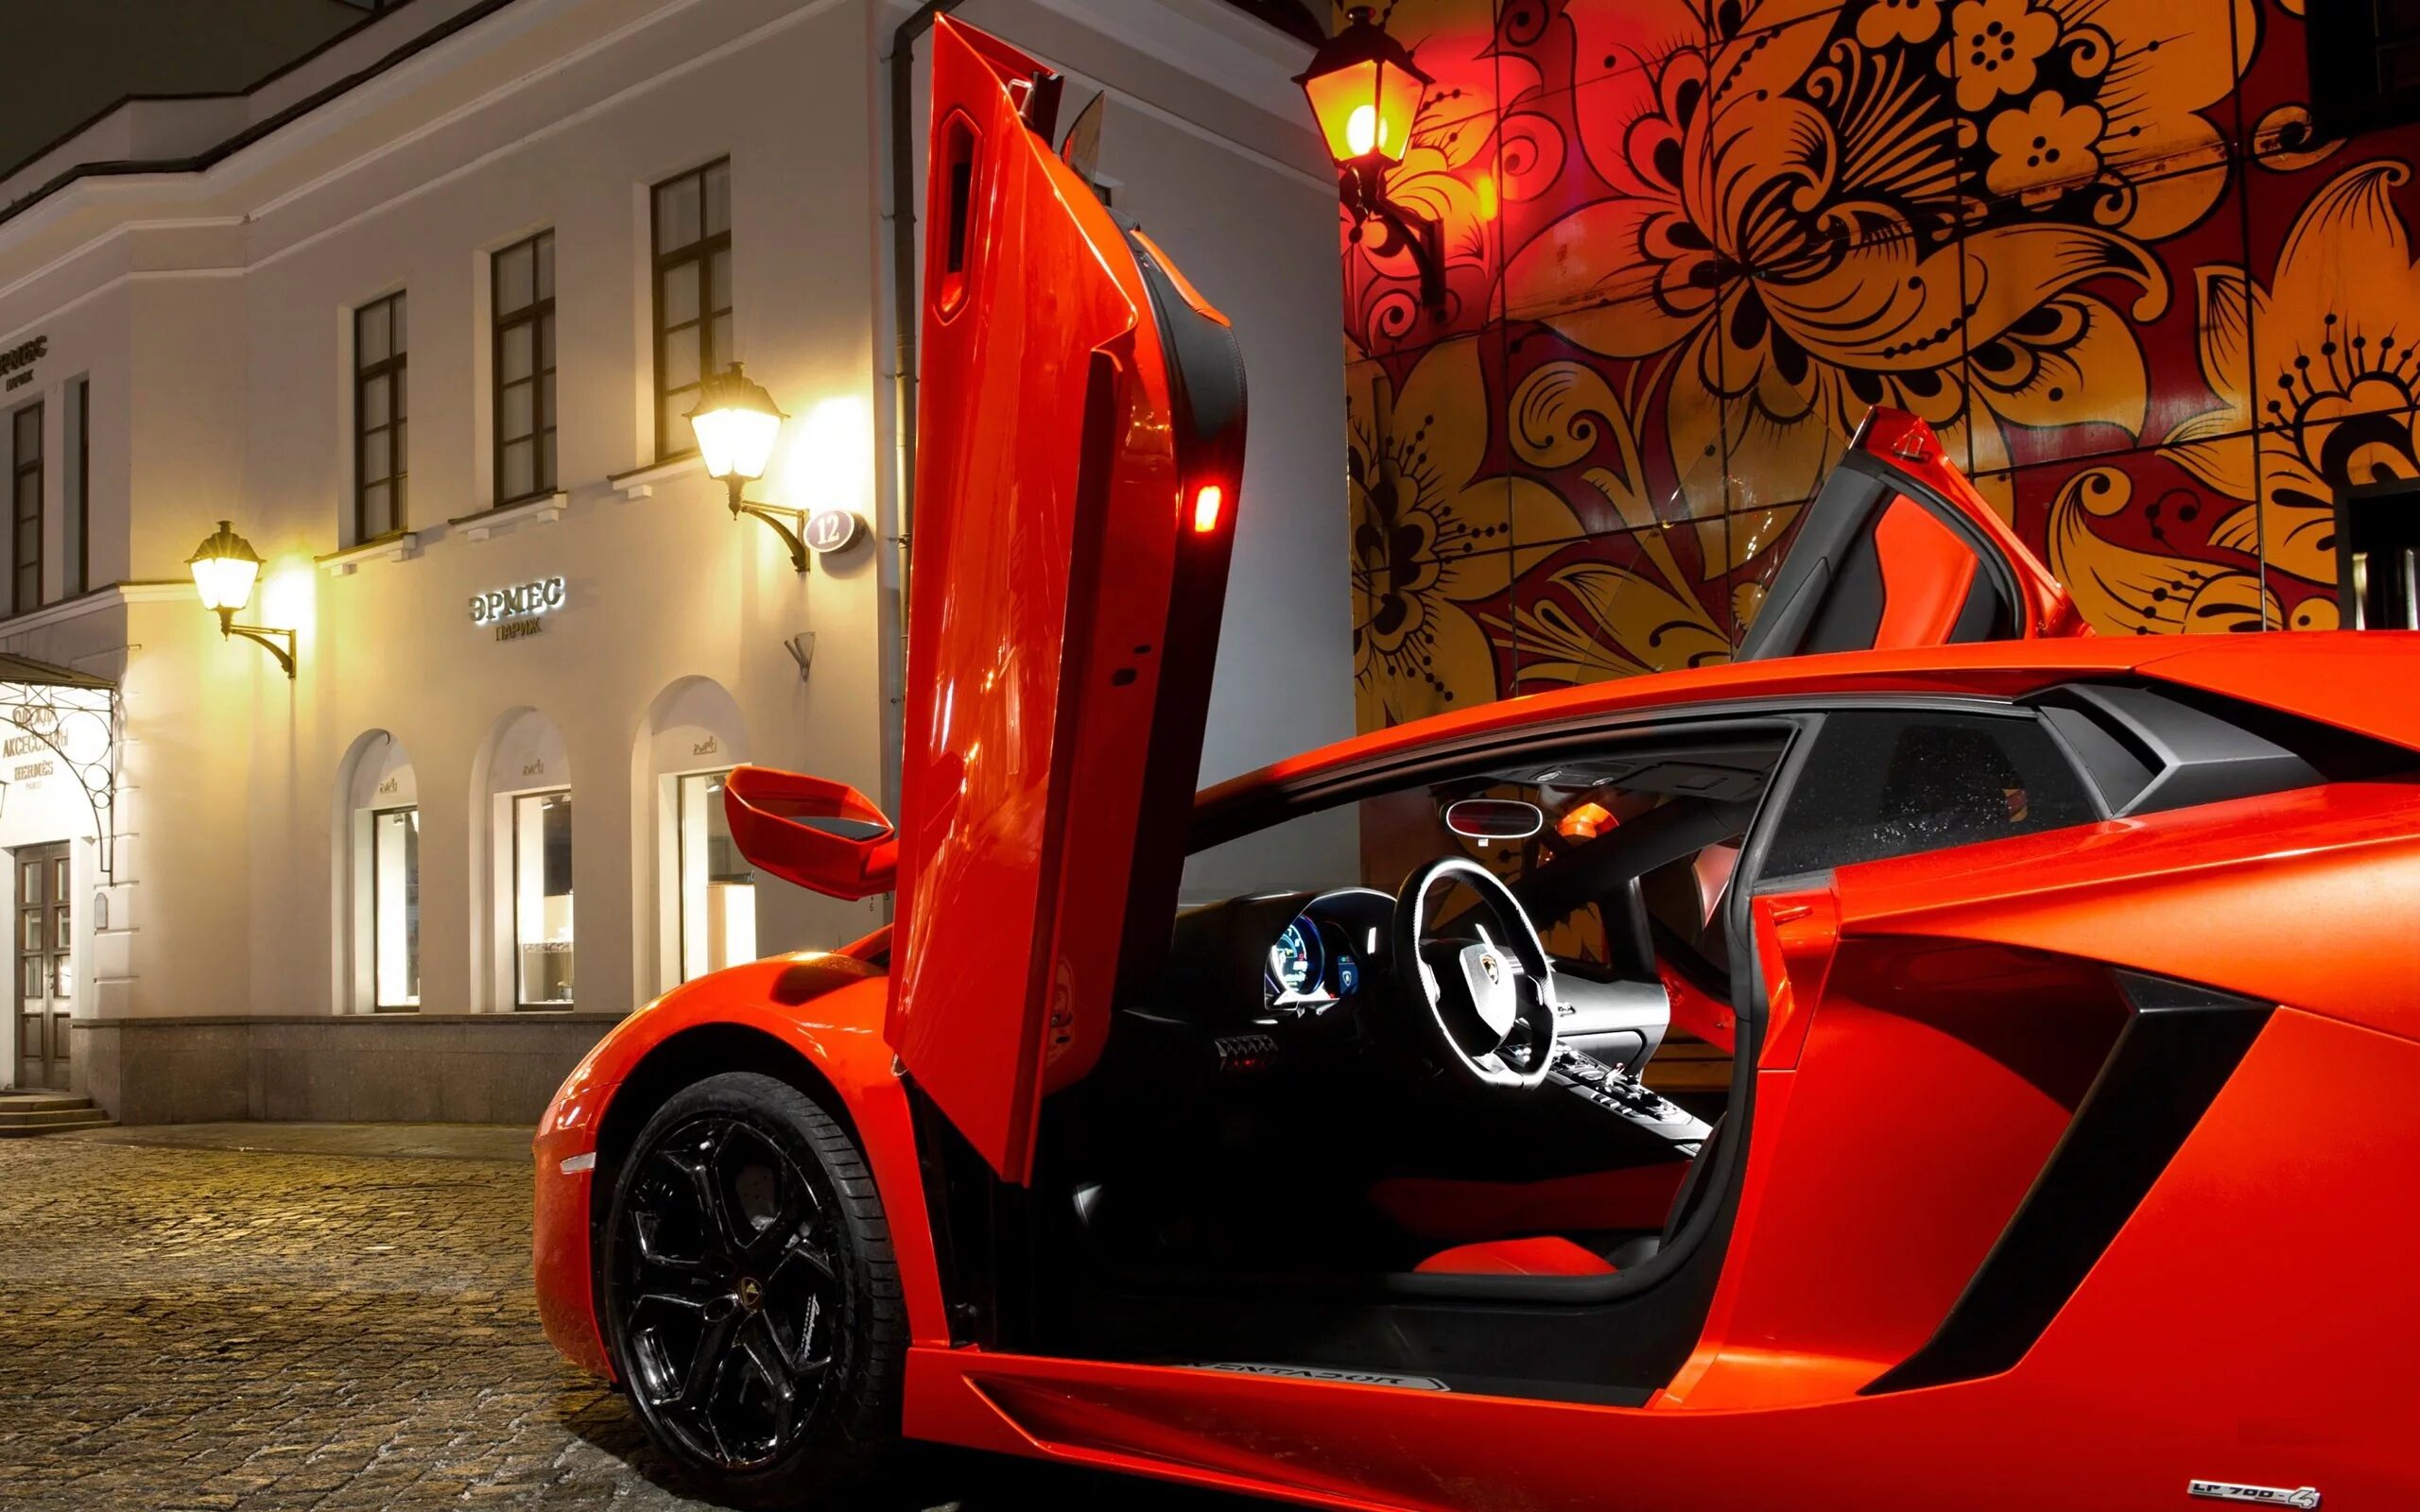 Lamborghini Aventador lp700-4 Red. Ламборгини авентадор с поднятыми дверями. Ламборгини авентадор салон. Красный, автомобиль, Lamborghini, Aventador.